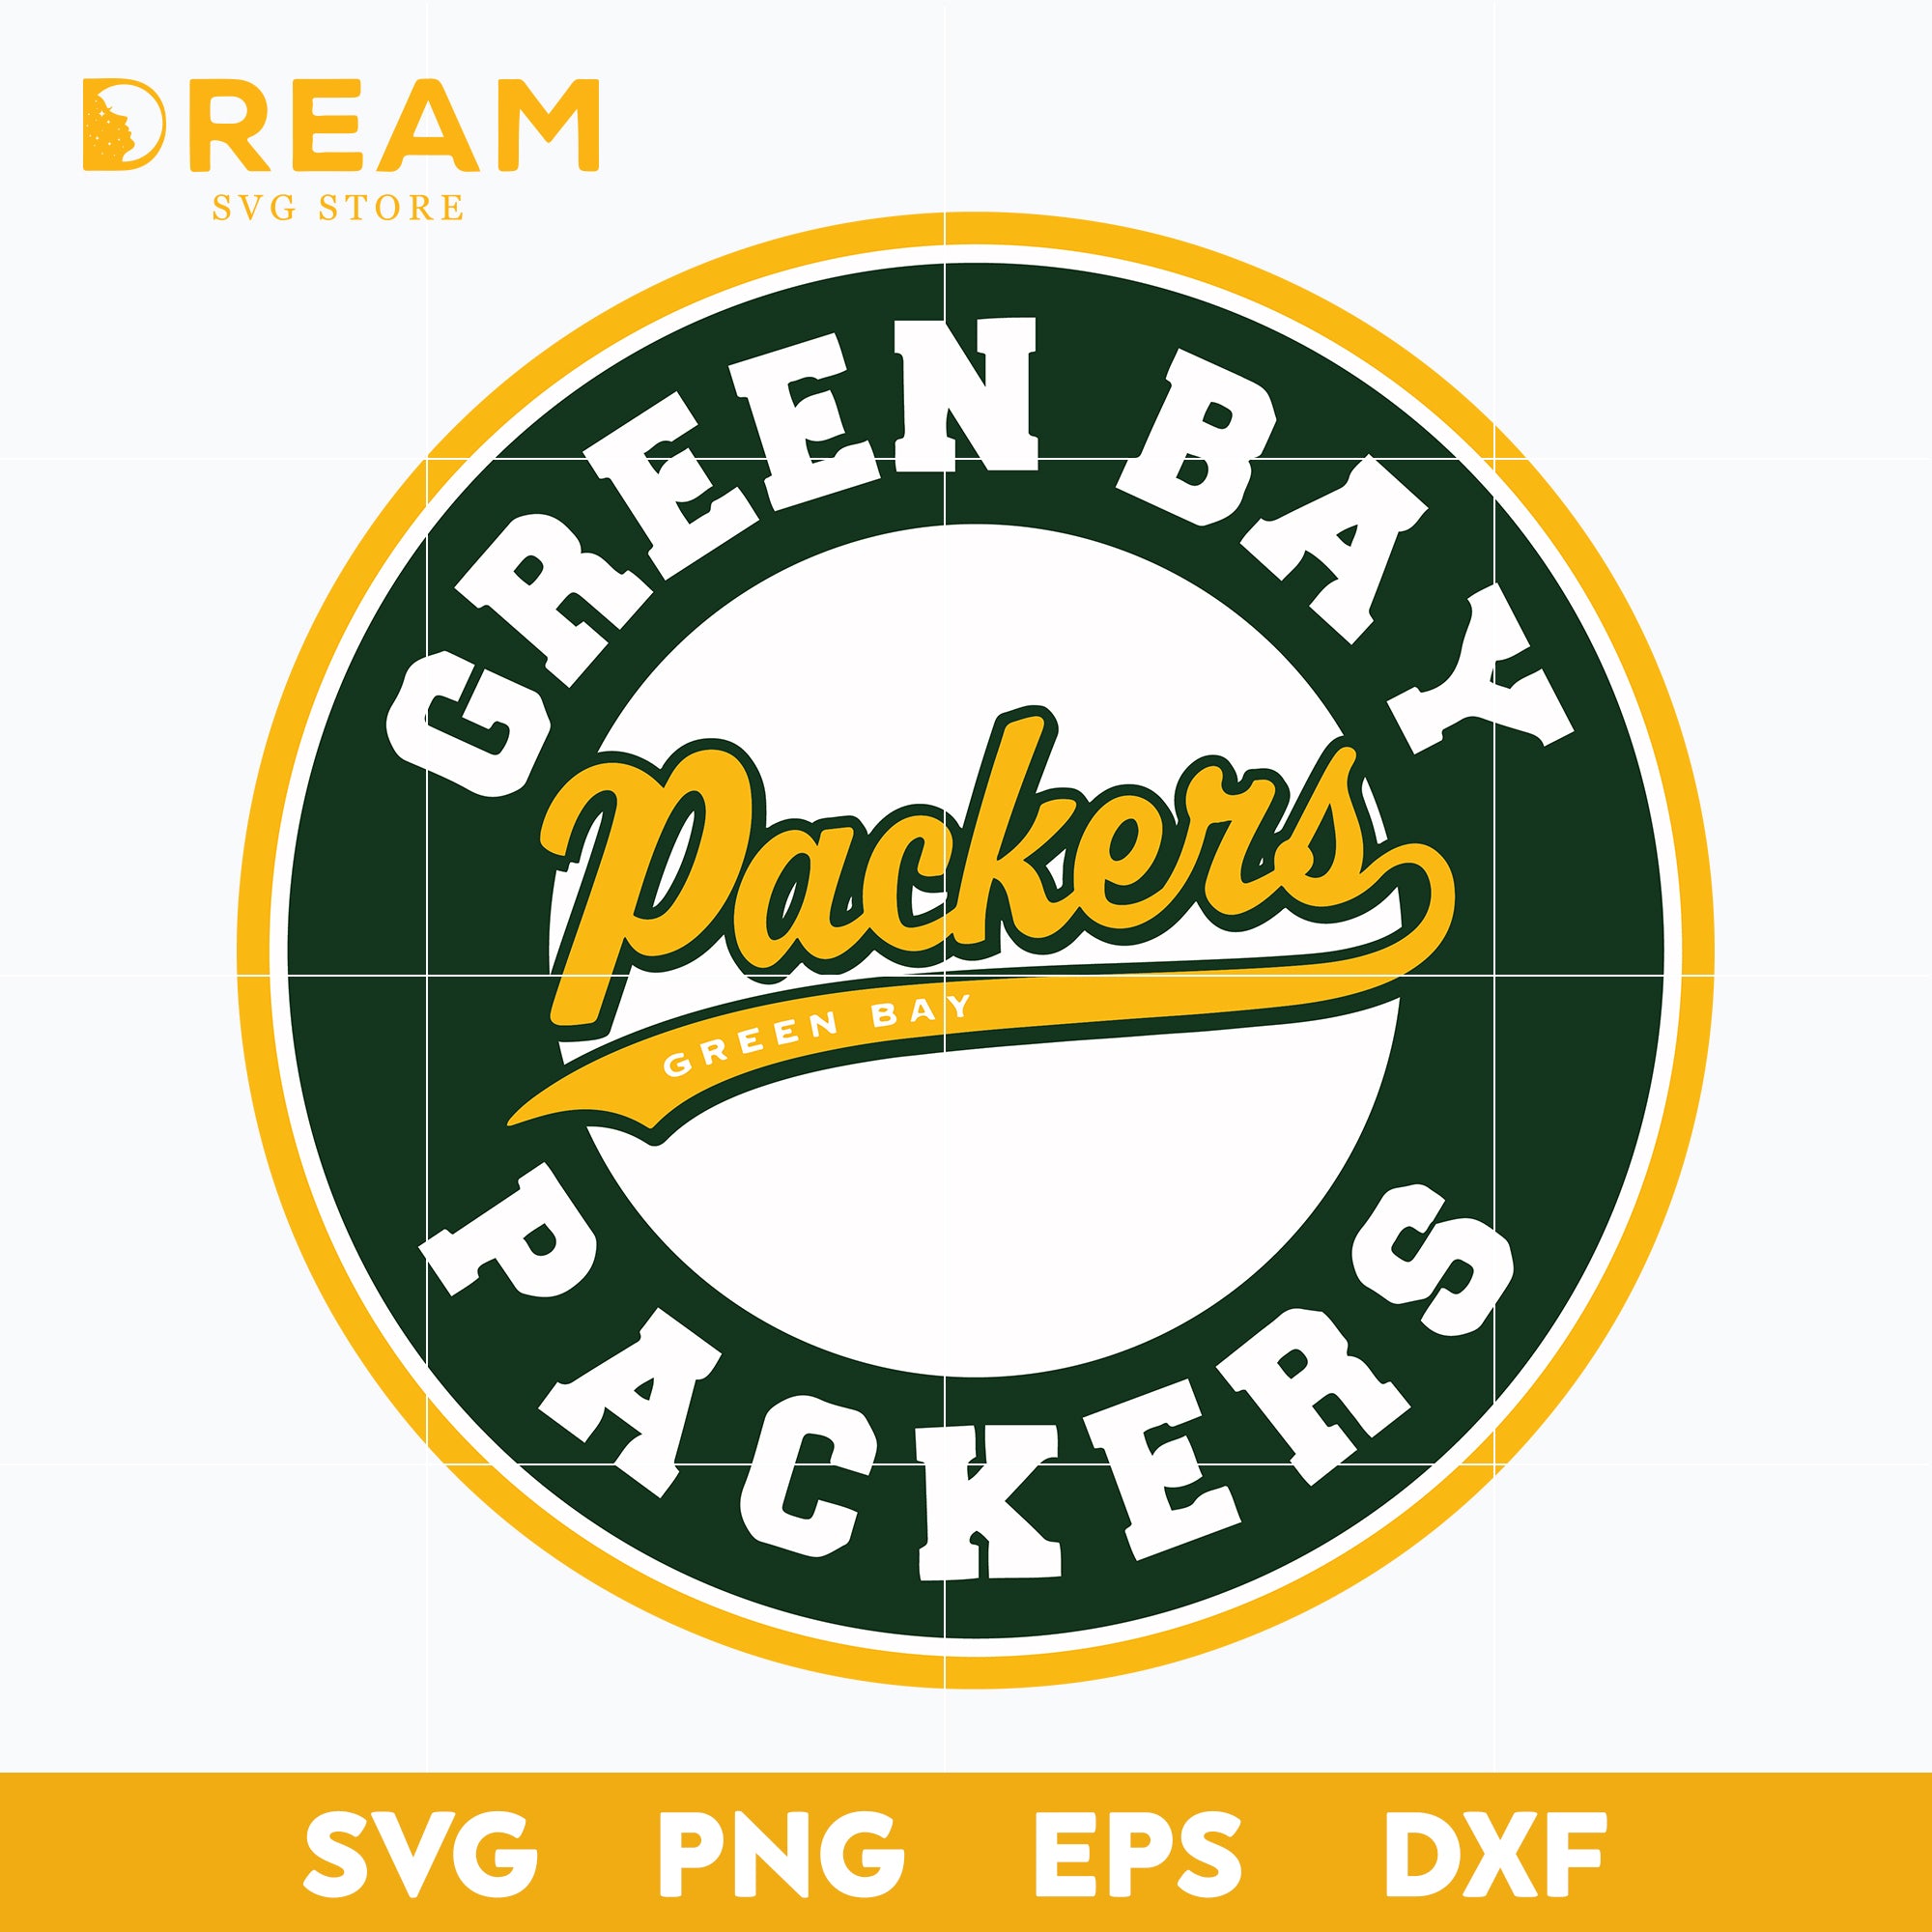 File:Green Bay Packers logo.svg - Wikipedia